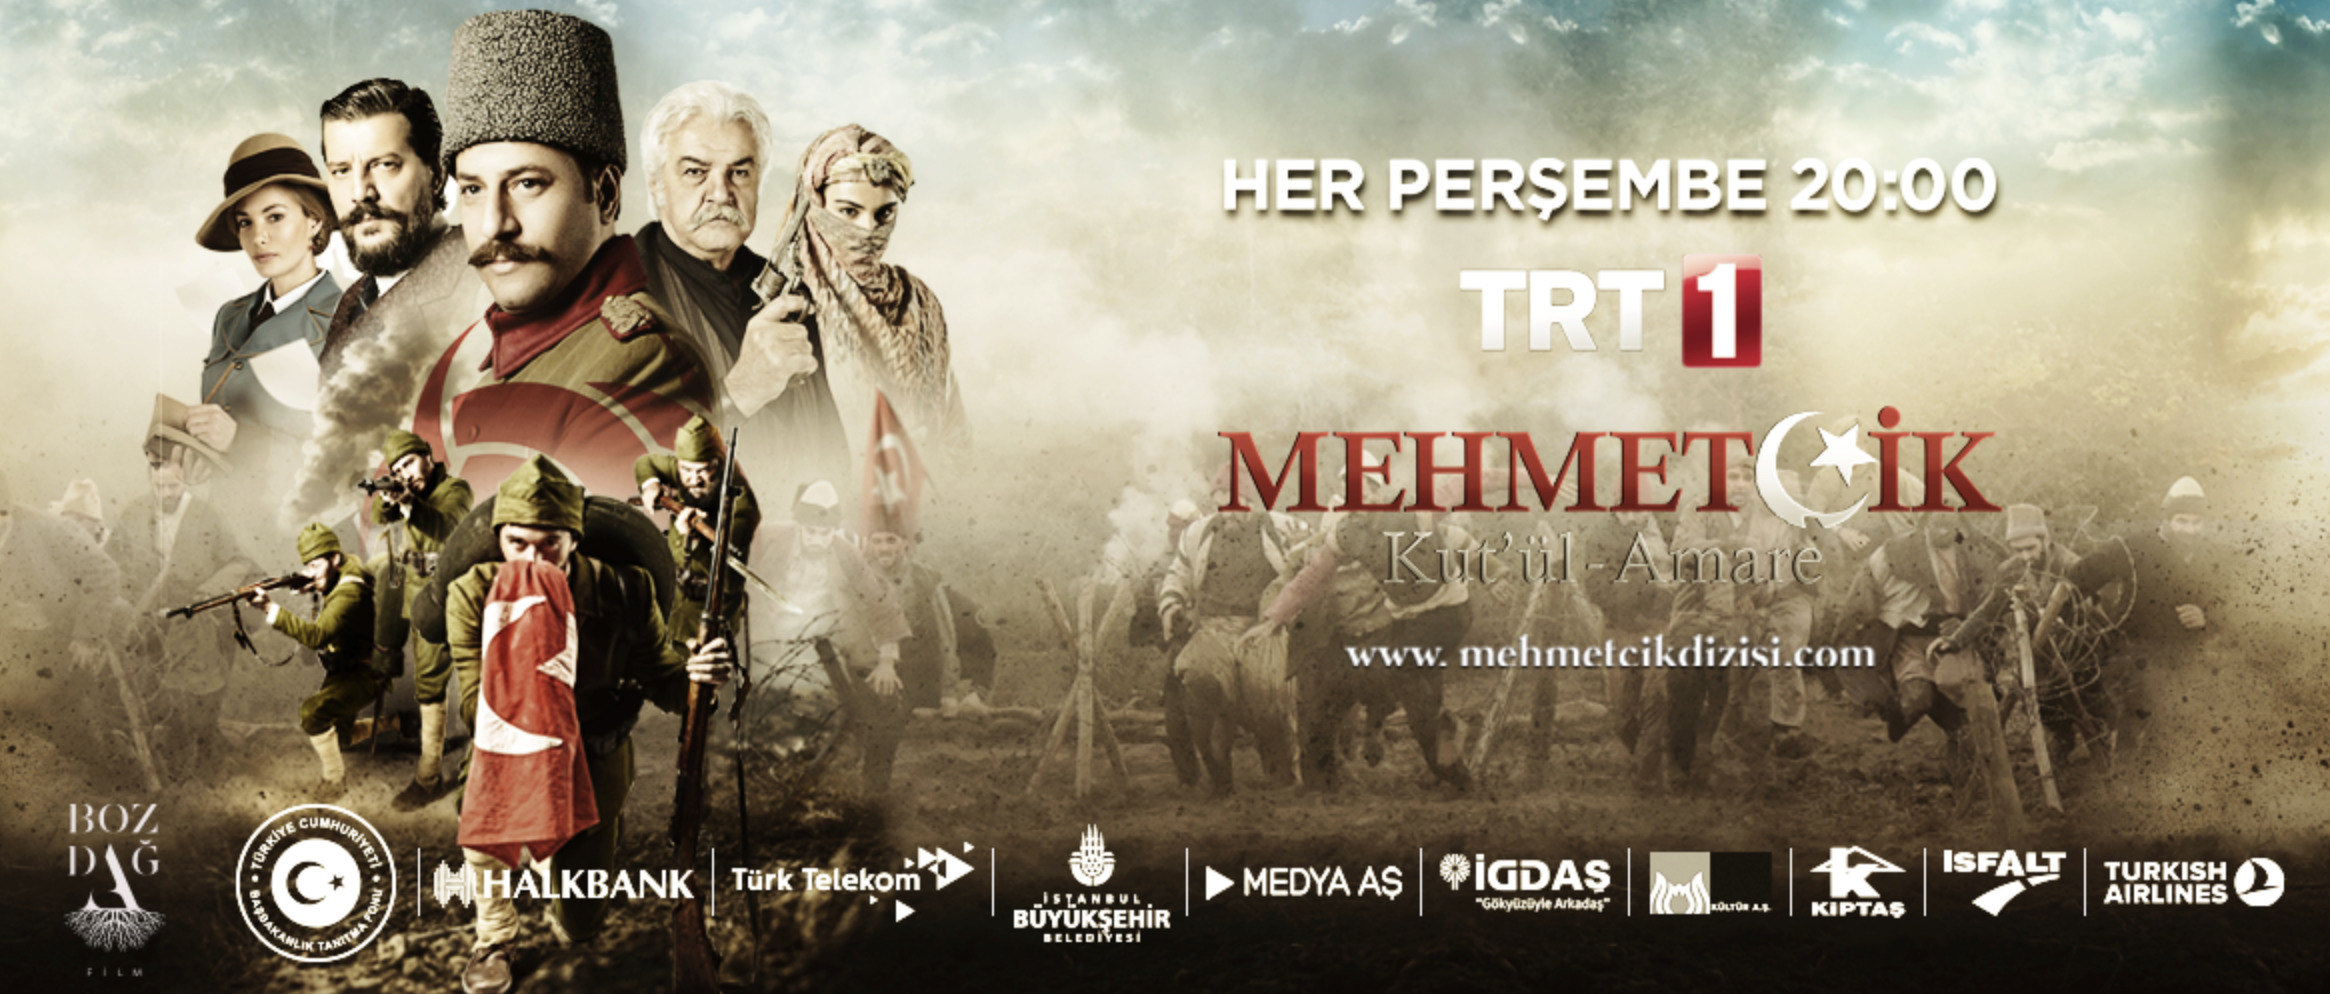 Mega Sized TV Poster Image for Mehmetçik Kut'ül Amare (#27 of 41)